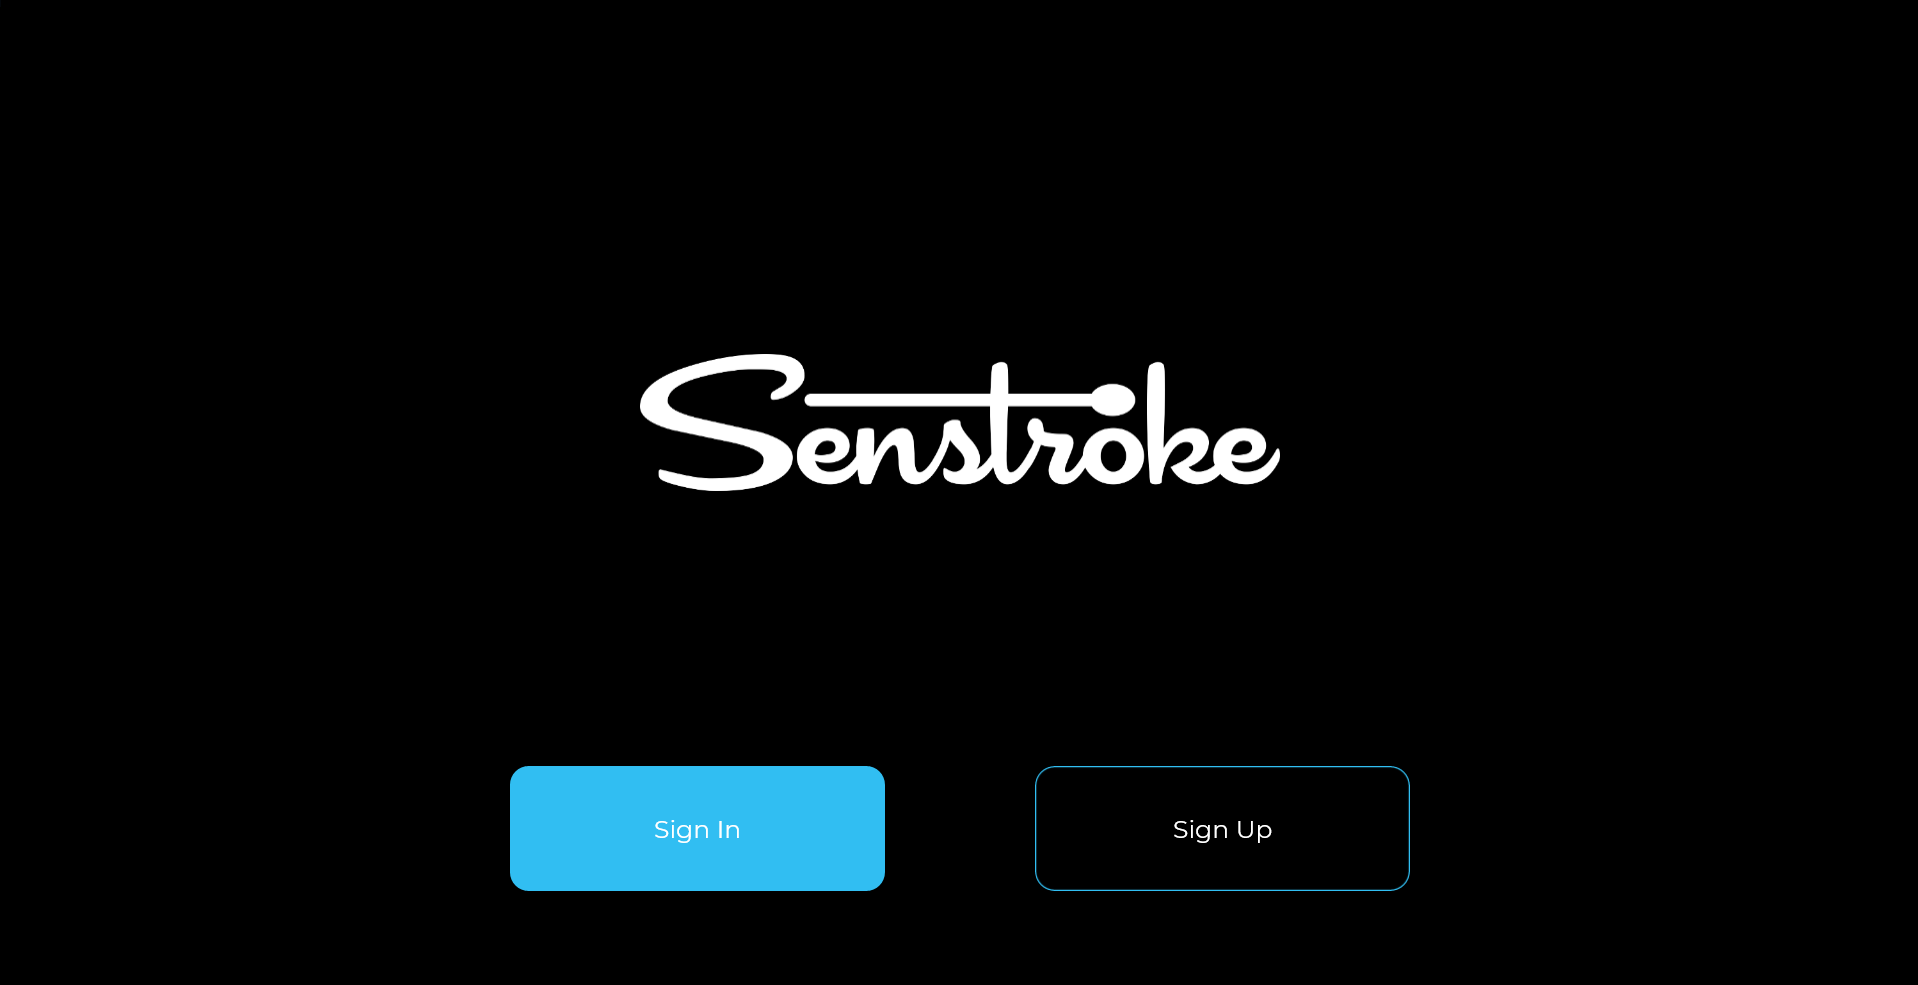 Senstroke